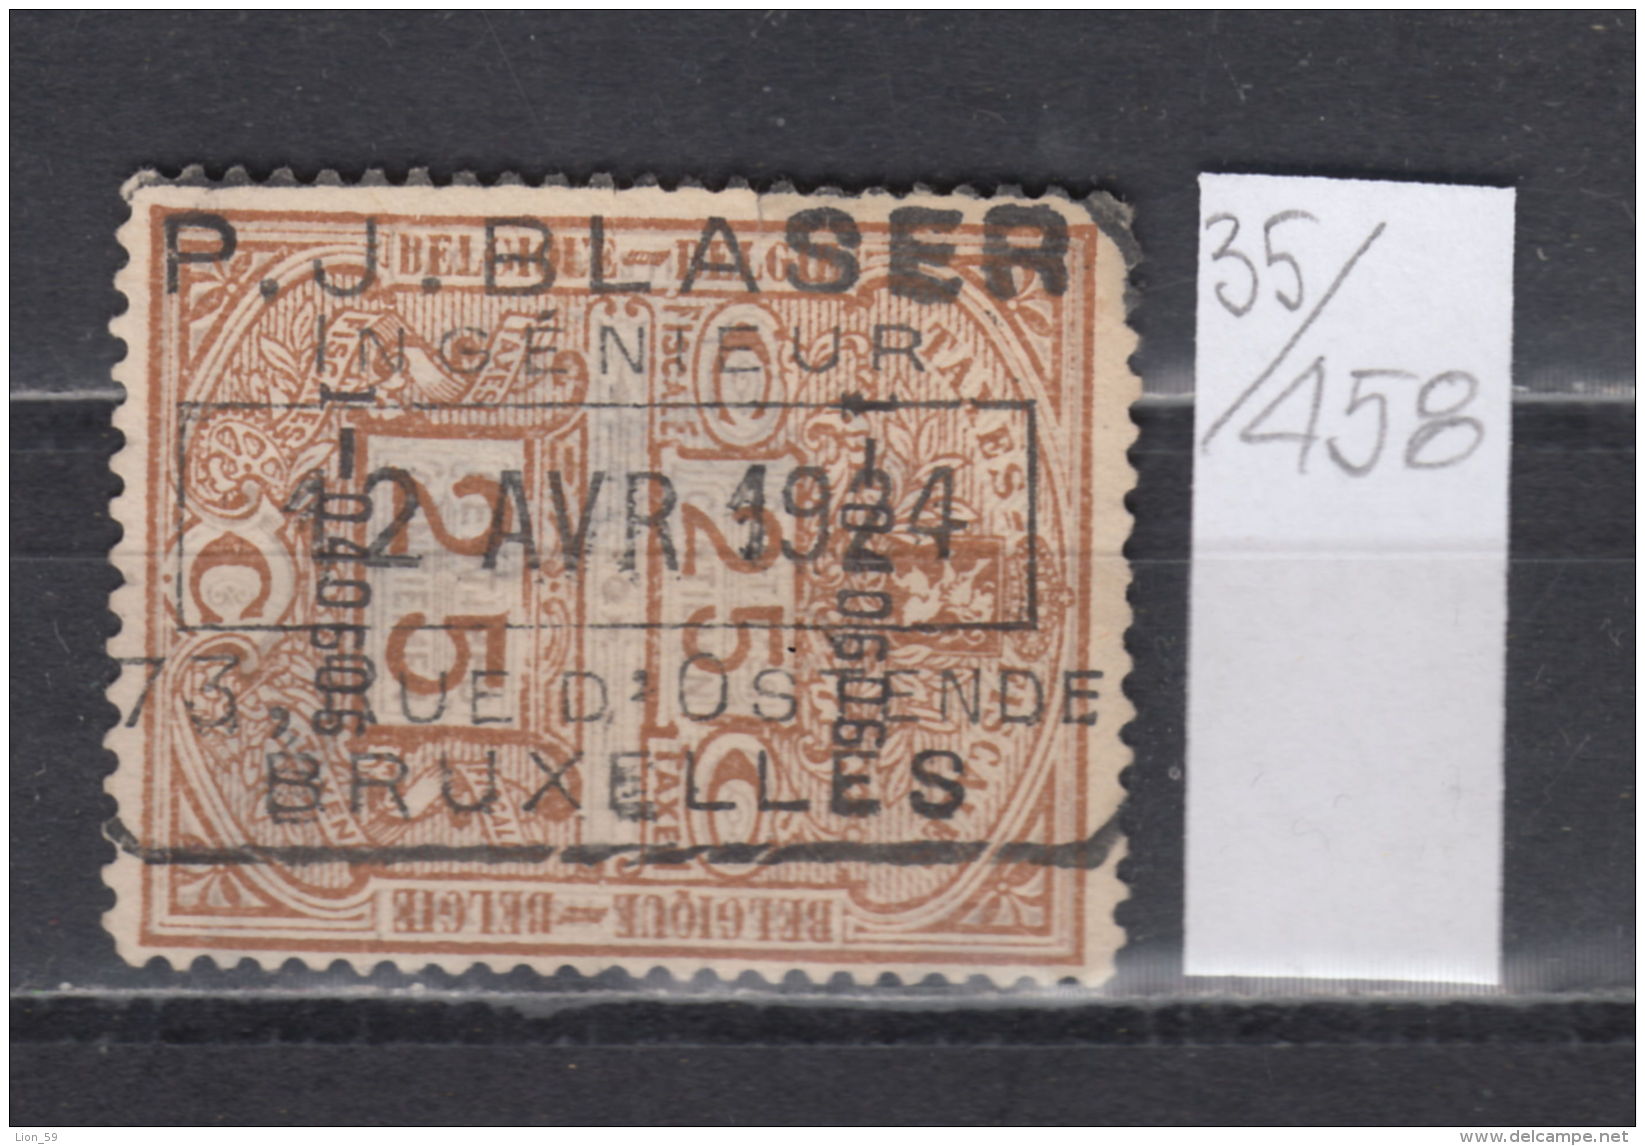 35K458 / 1924 - 25 C. TAXES FISCALES , RAILWAY P.J. BLASER - BRUXELLES , Revenue Fiscaux Steuermarken , Belgique Belgium - Francobolli